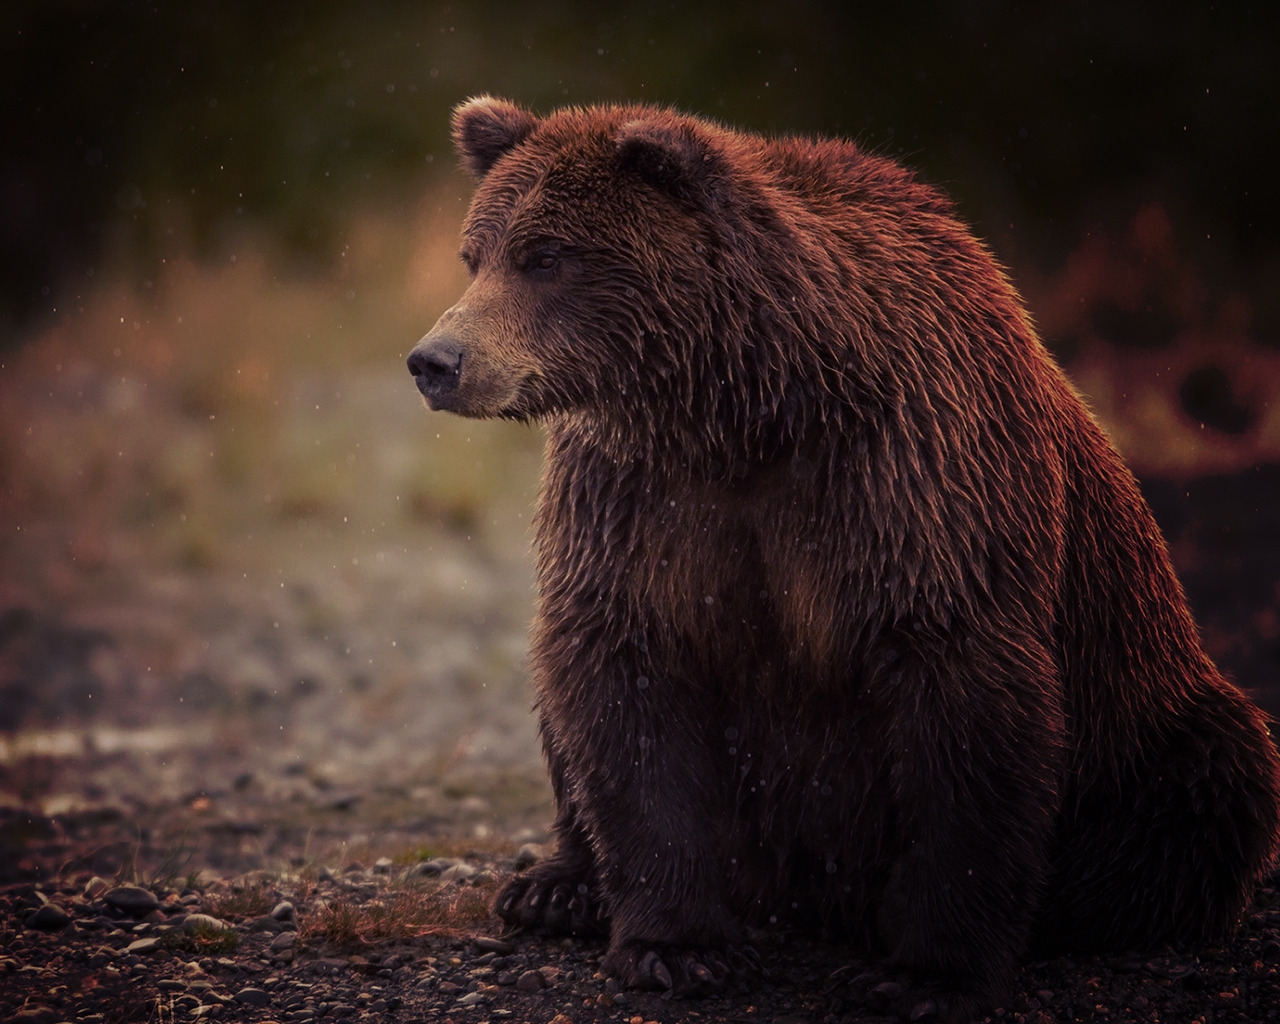 Sad Bear for 1280 x 1024 resolution